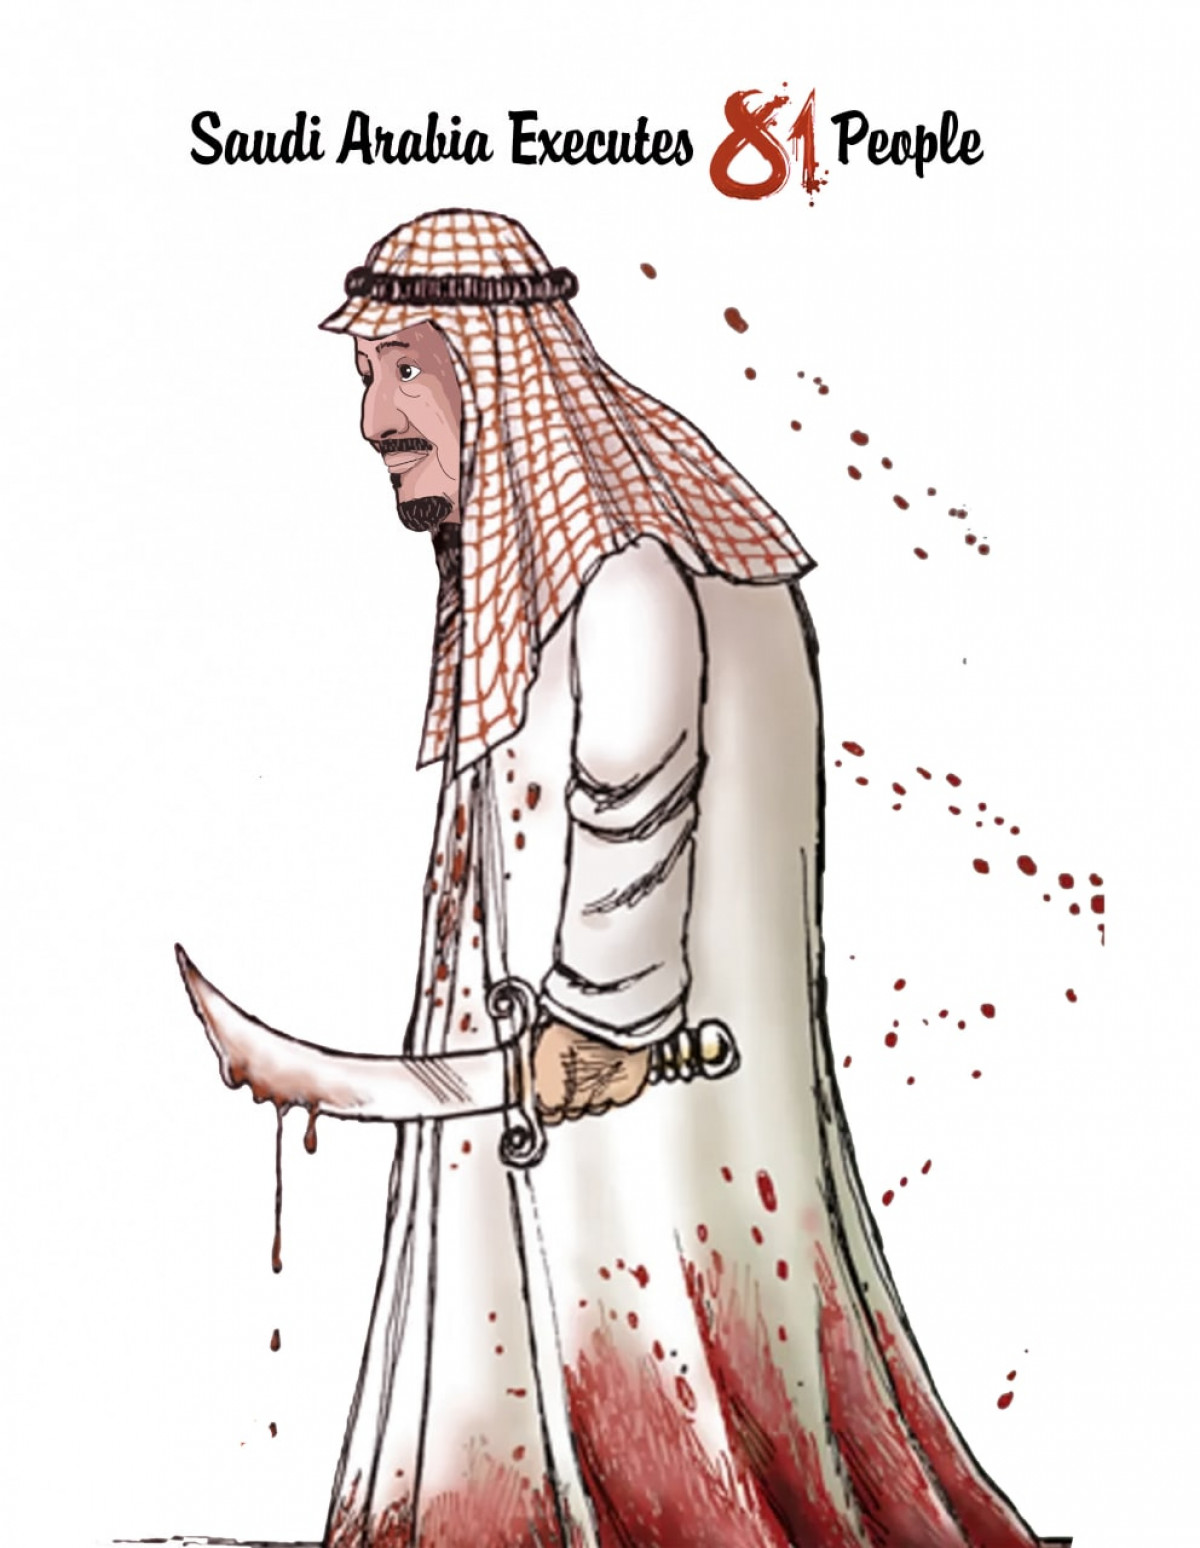 Saudi Arabia Executes 81 people